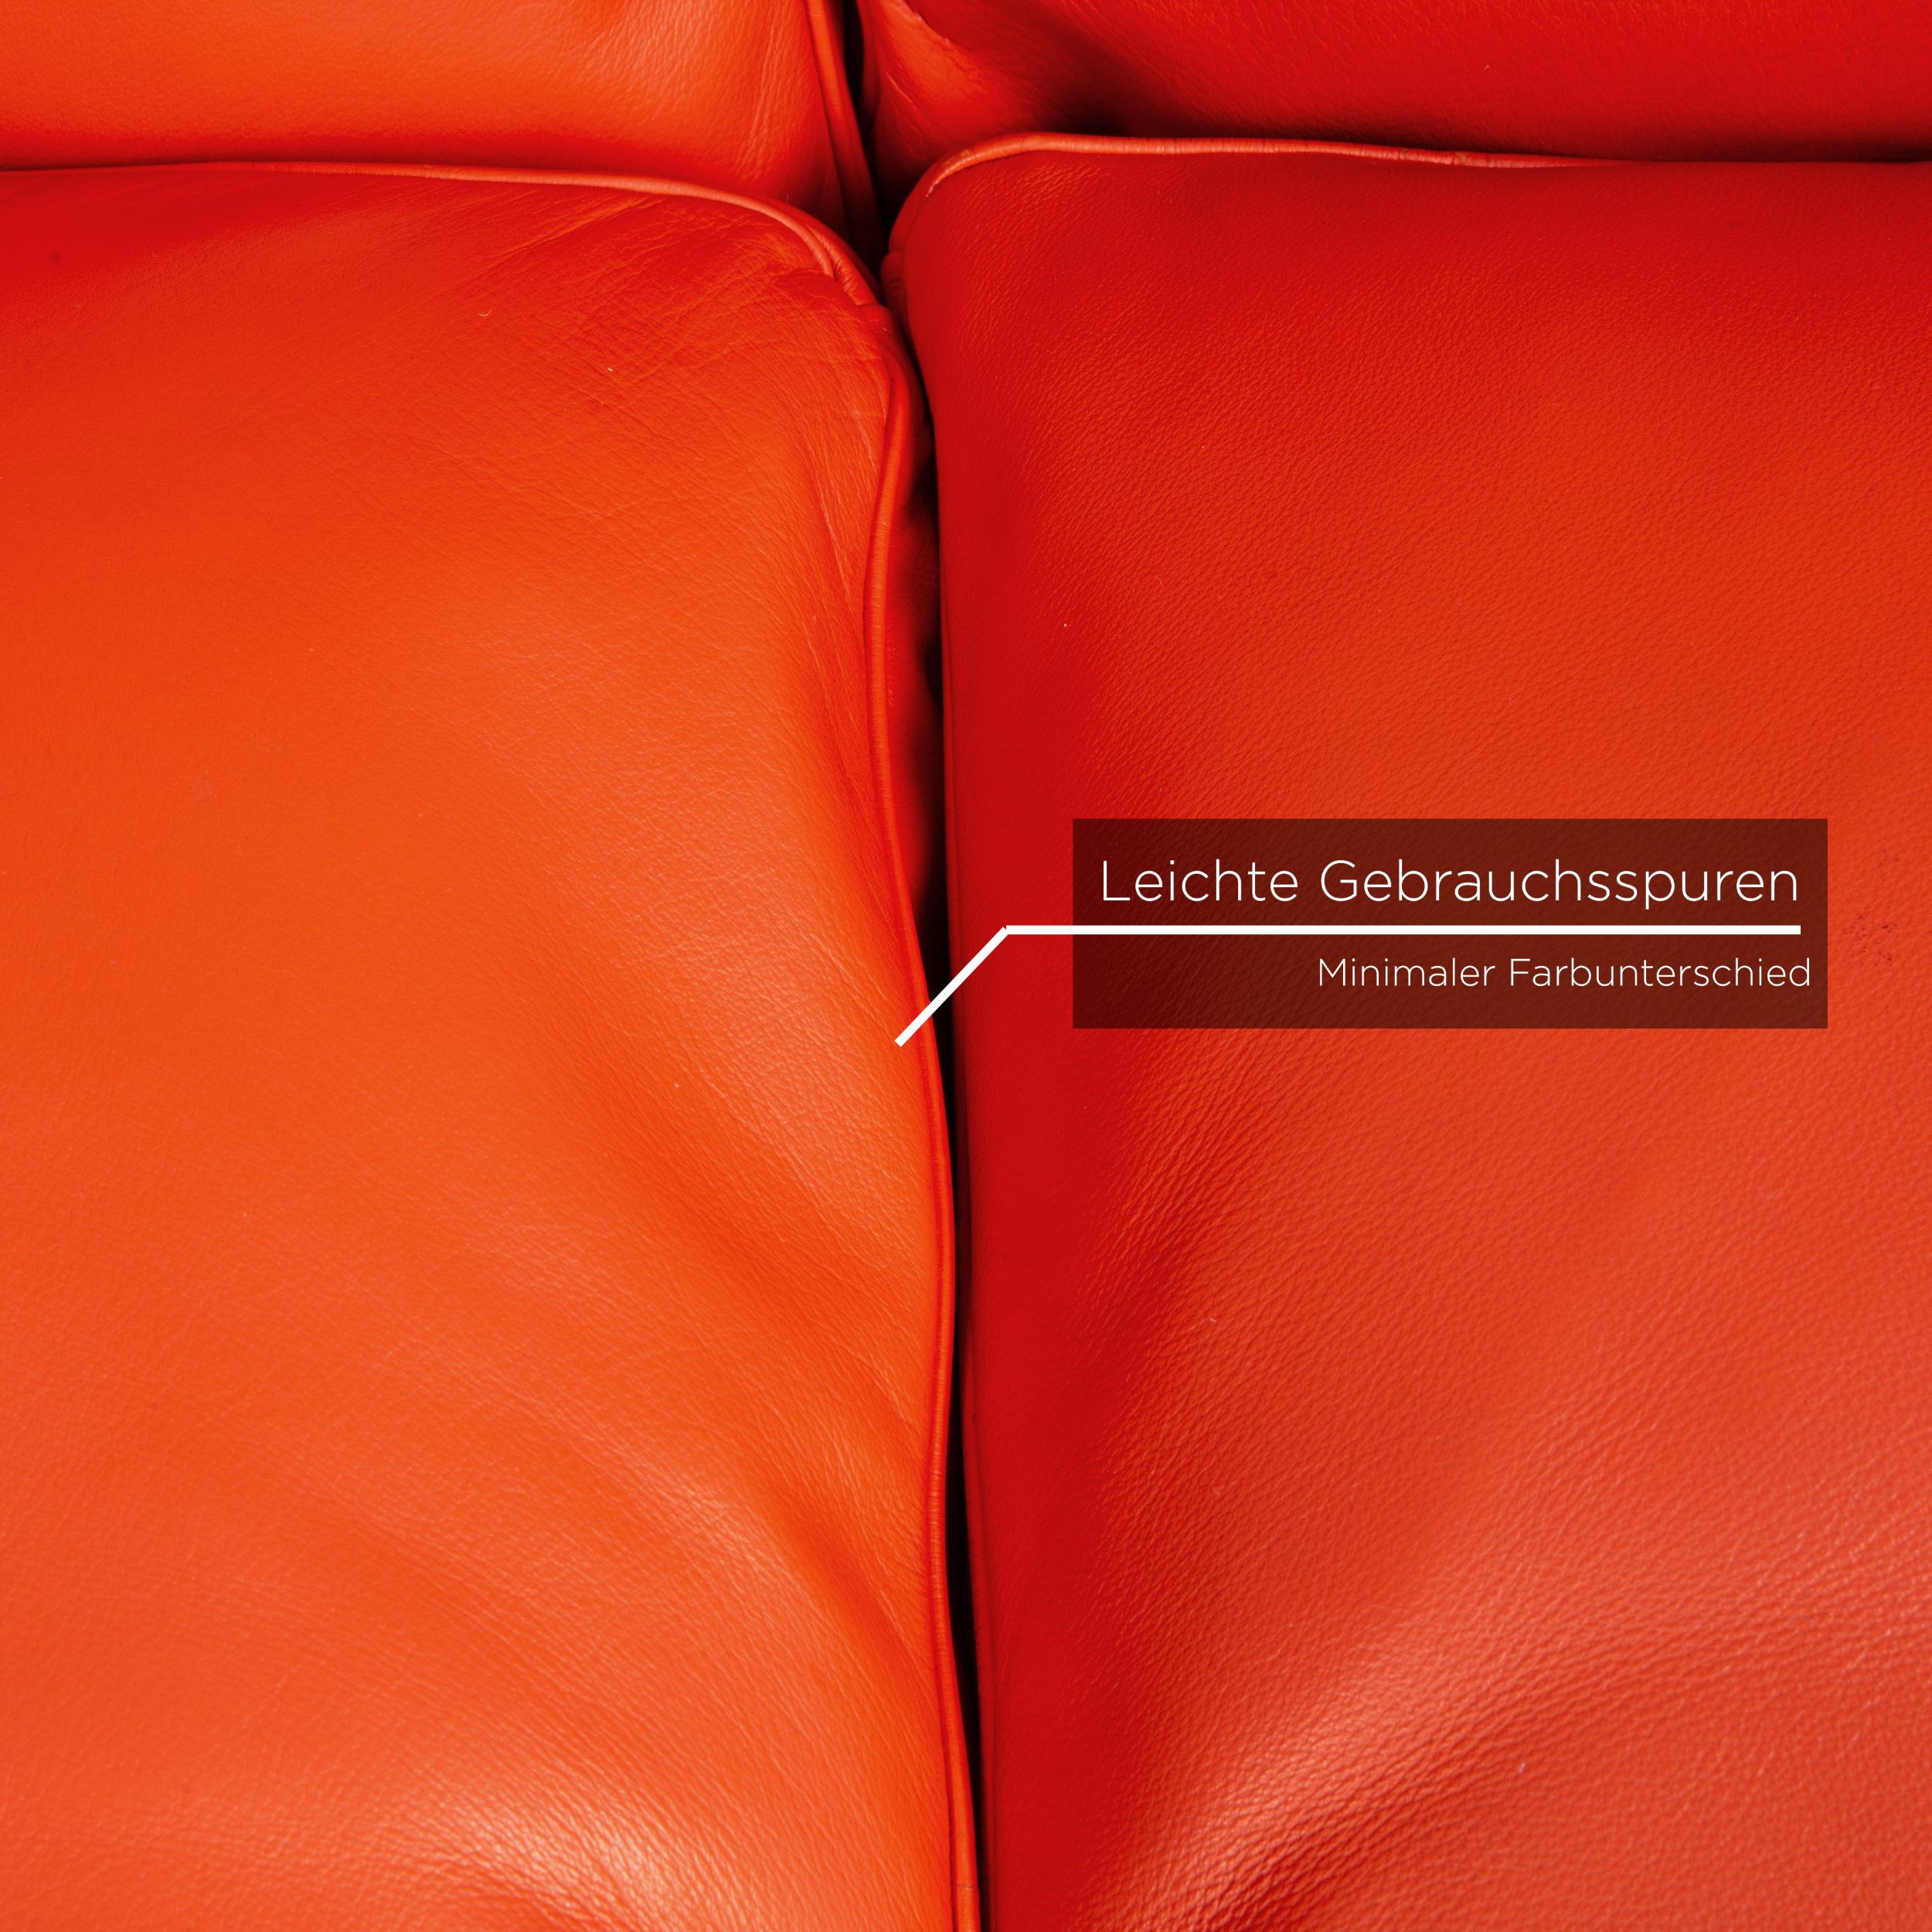 Italian Poltrona Frau Dream on Leather Sofa Coral Orange Chesterfield Sofa Couch